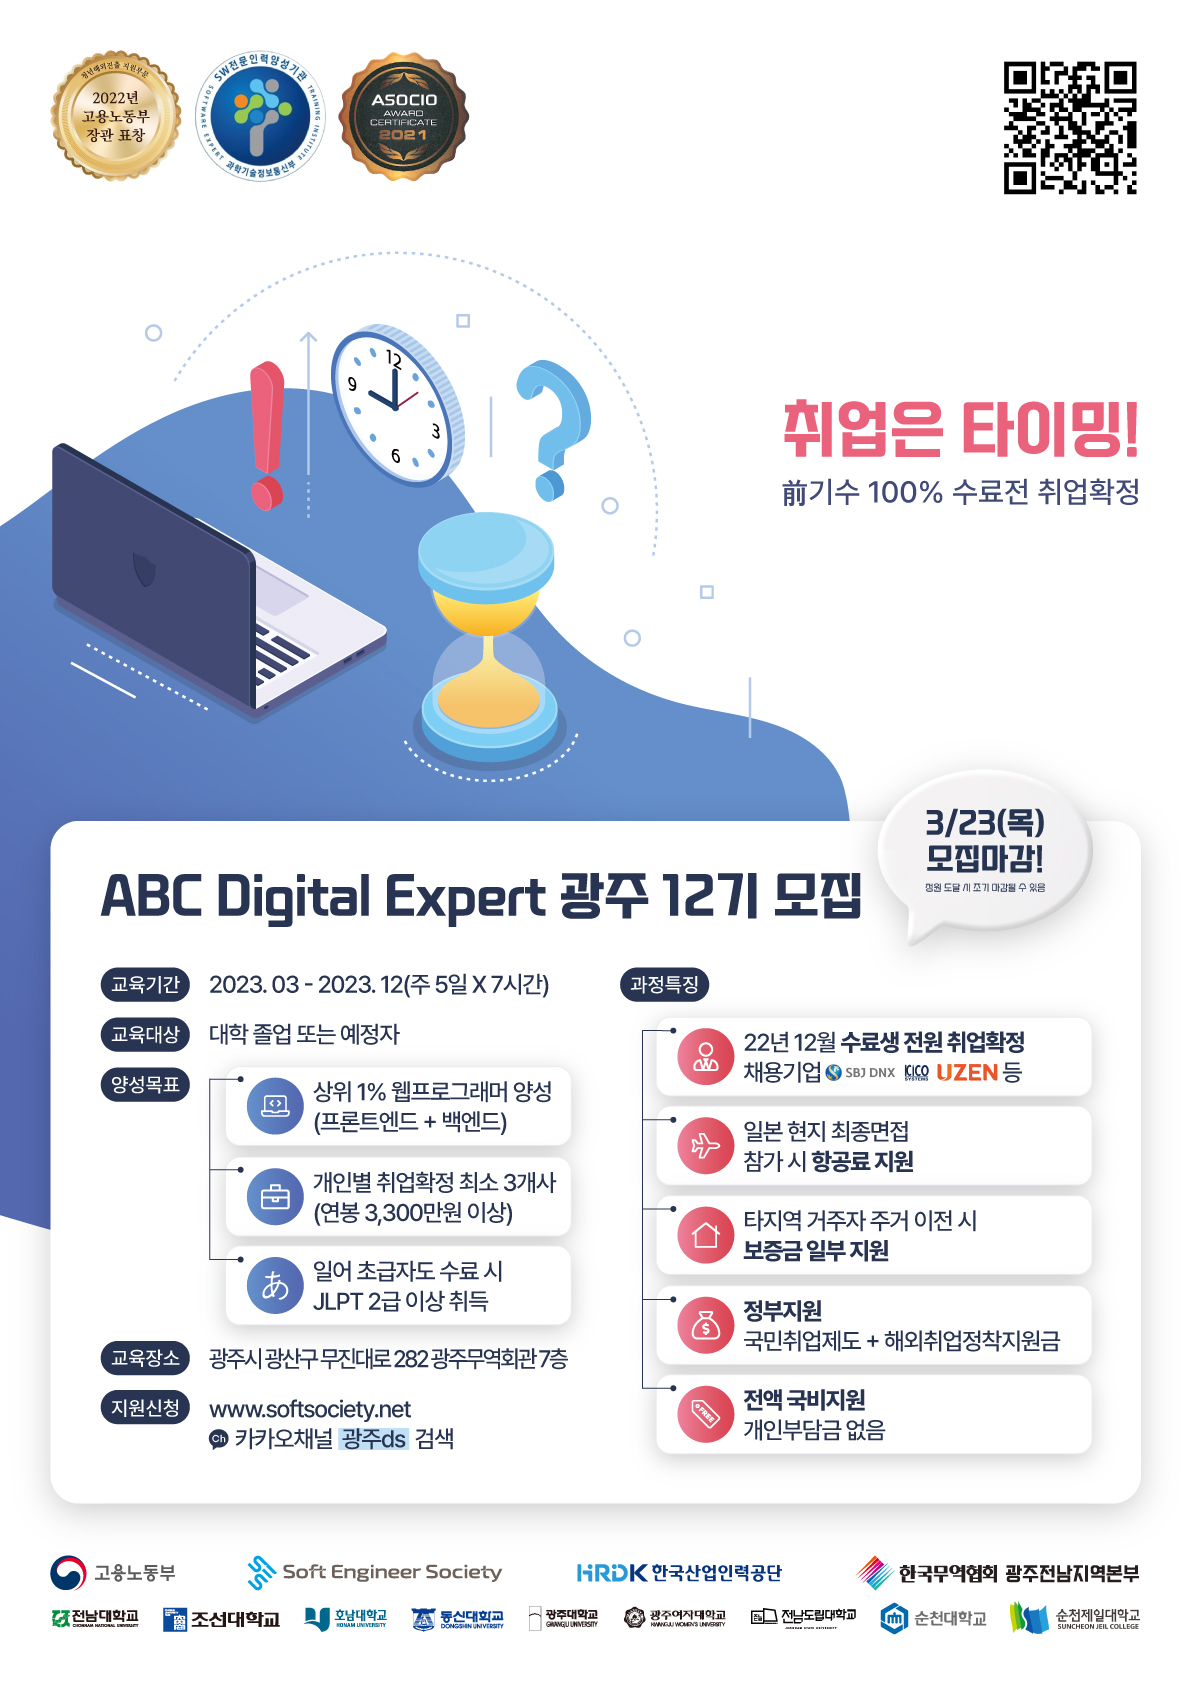 ABC Digital Expert 광주12기